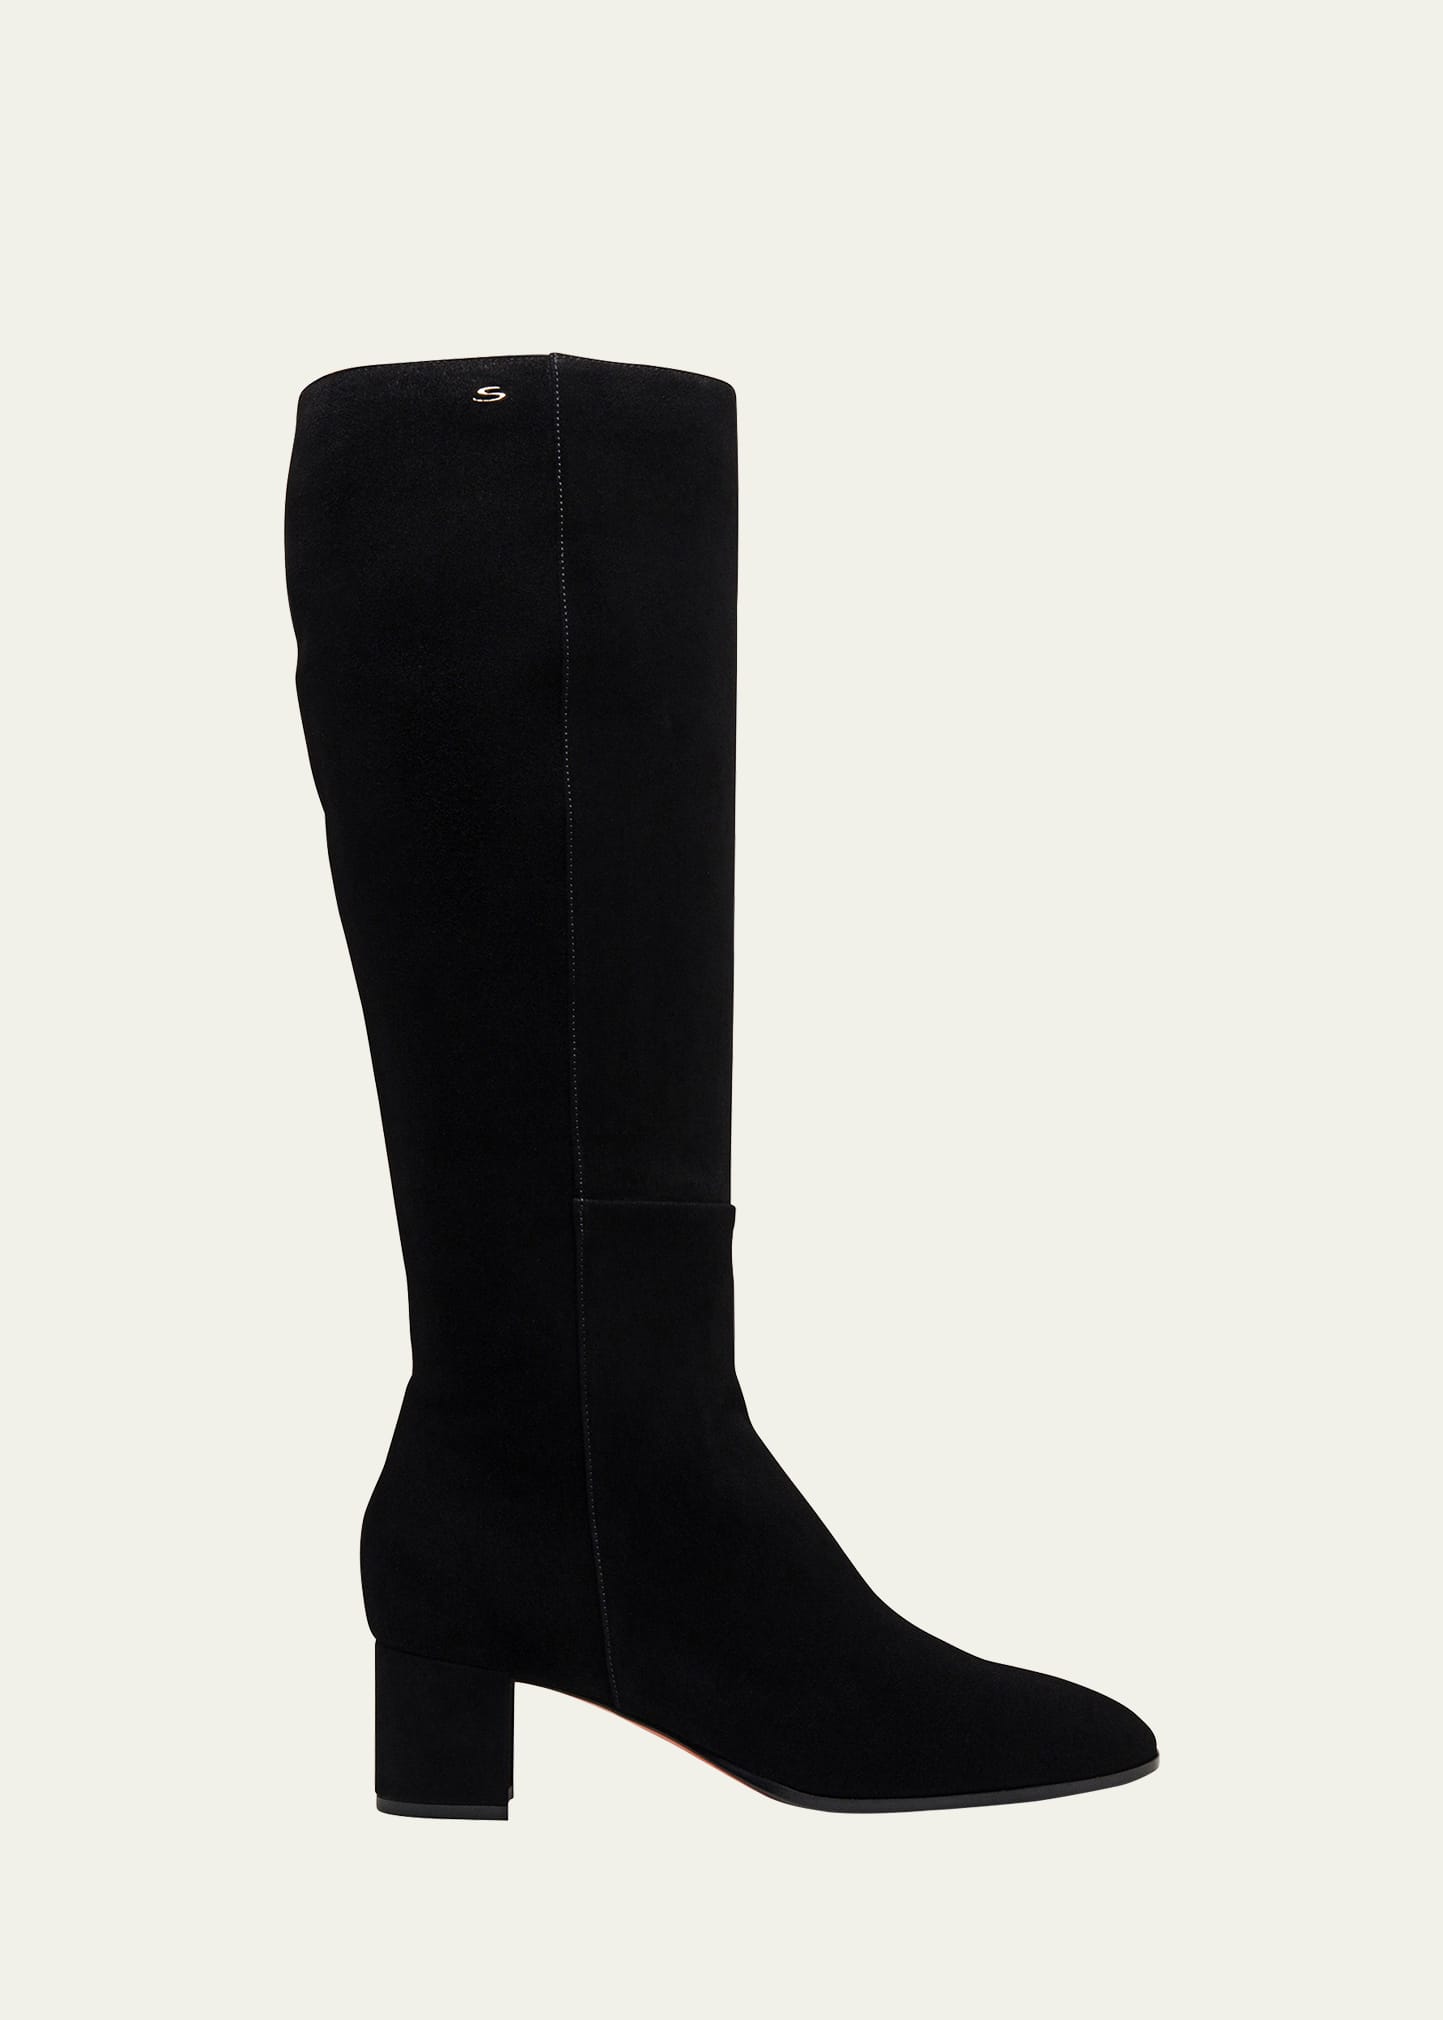 Alexander Wang Kori Leather Tilt-Heel Boots, Black - Bergdorf Goodman